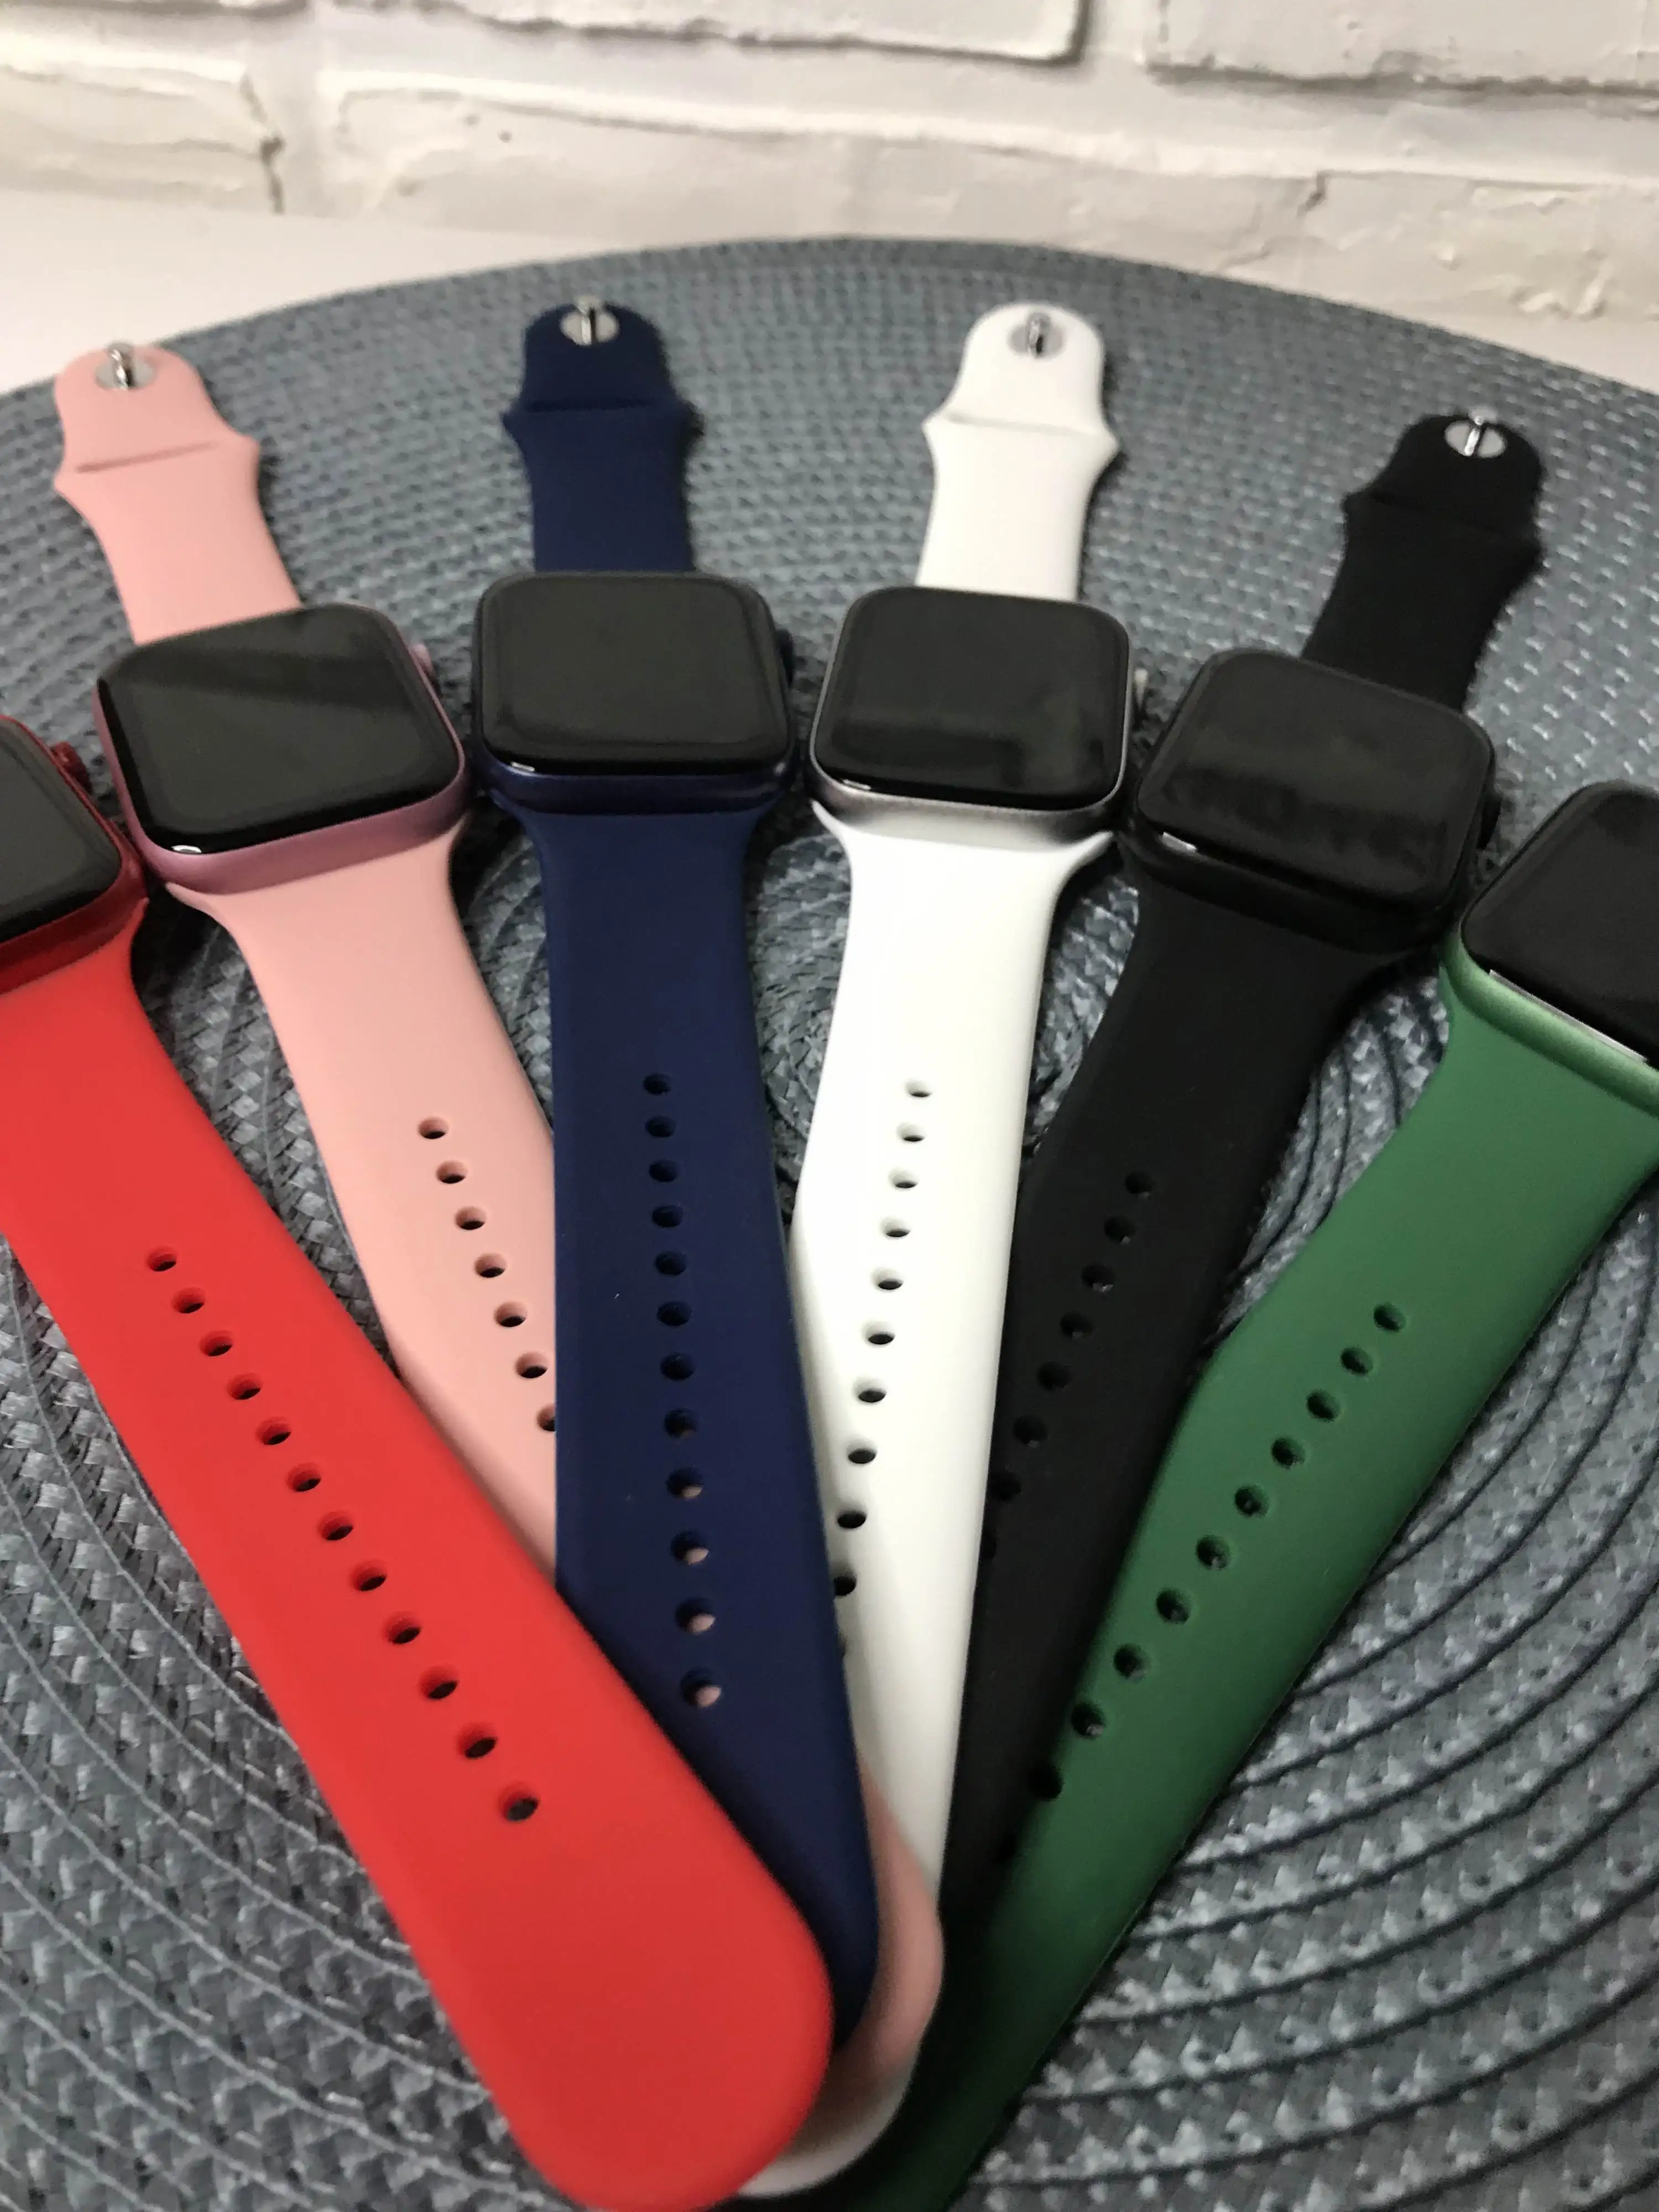 Epson Smart Canvas Specification Ultra Hero Pattern Wrist Watch Limite –  Gacha Hobbies